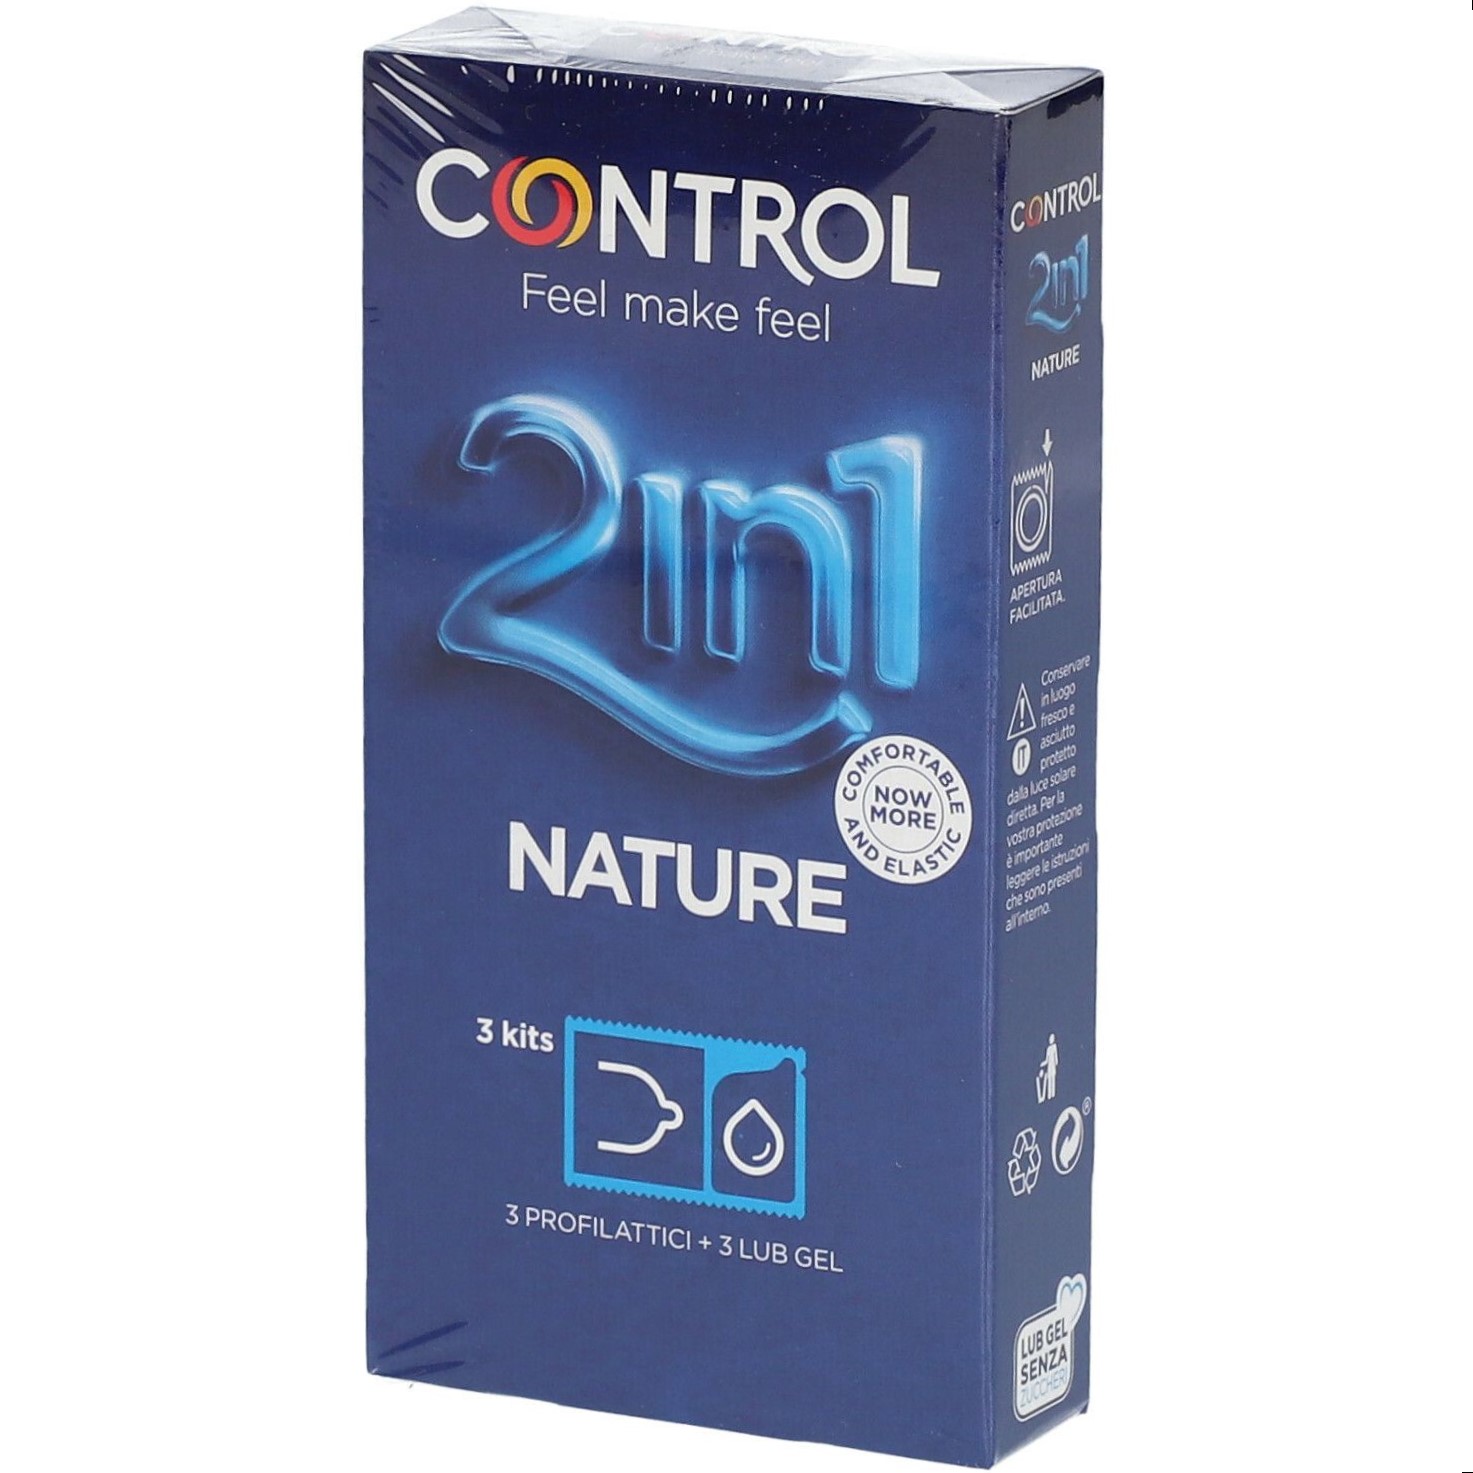 Image of 2In1 Nature + Lube Nature Control 3 Profilattici + 3 Lub Gel